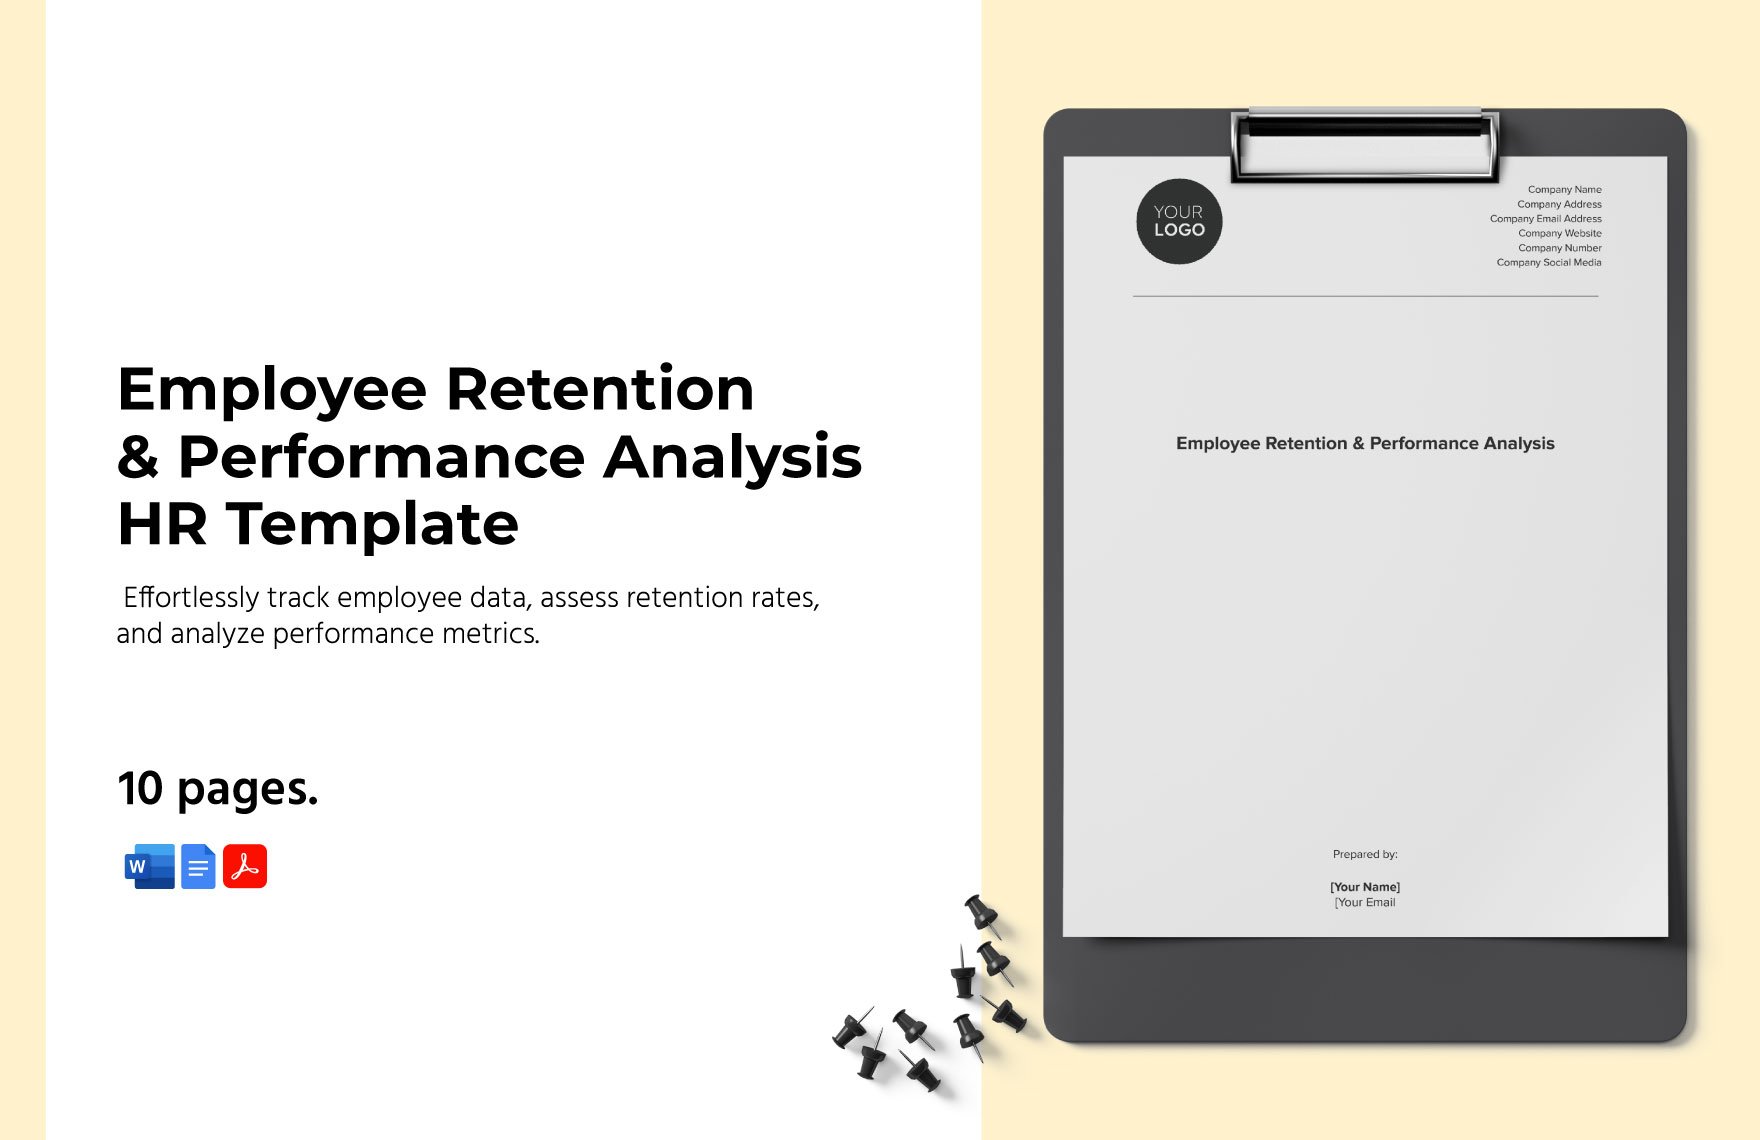 Employee Retention & Performance Analysis HR Template